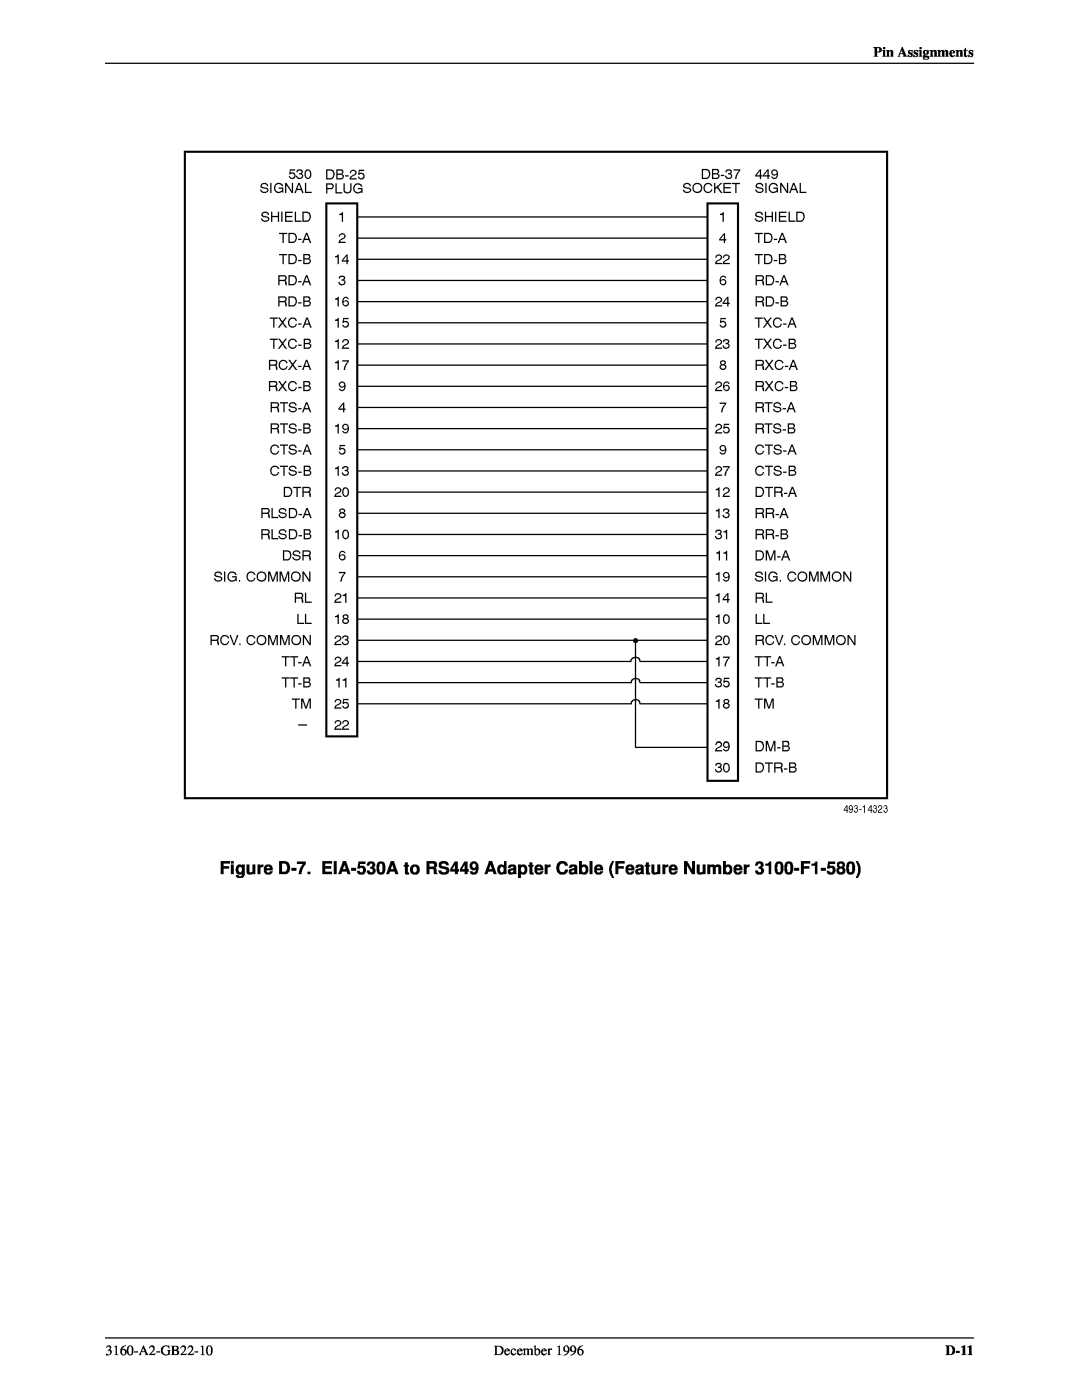 Paradyne 316x manual Pin Assignments, 3160-A2-GB22-10, December, D-11 